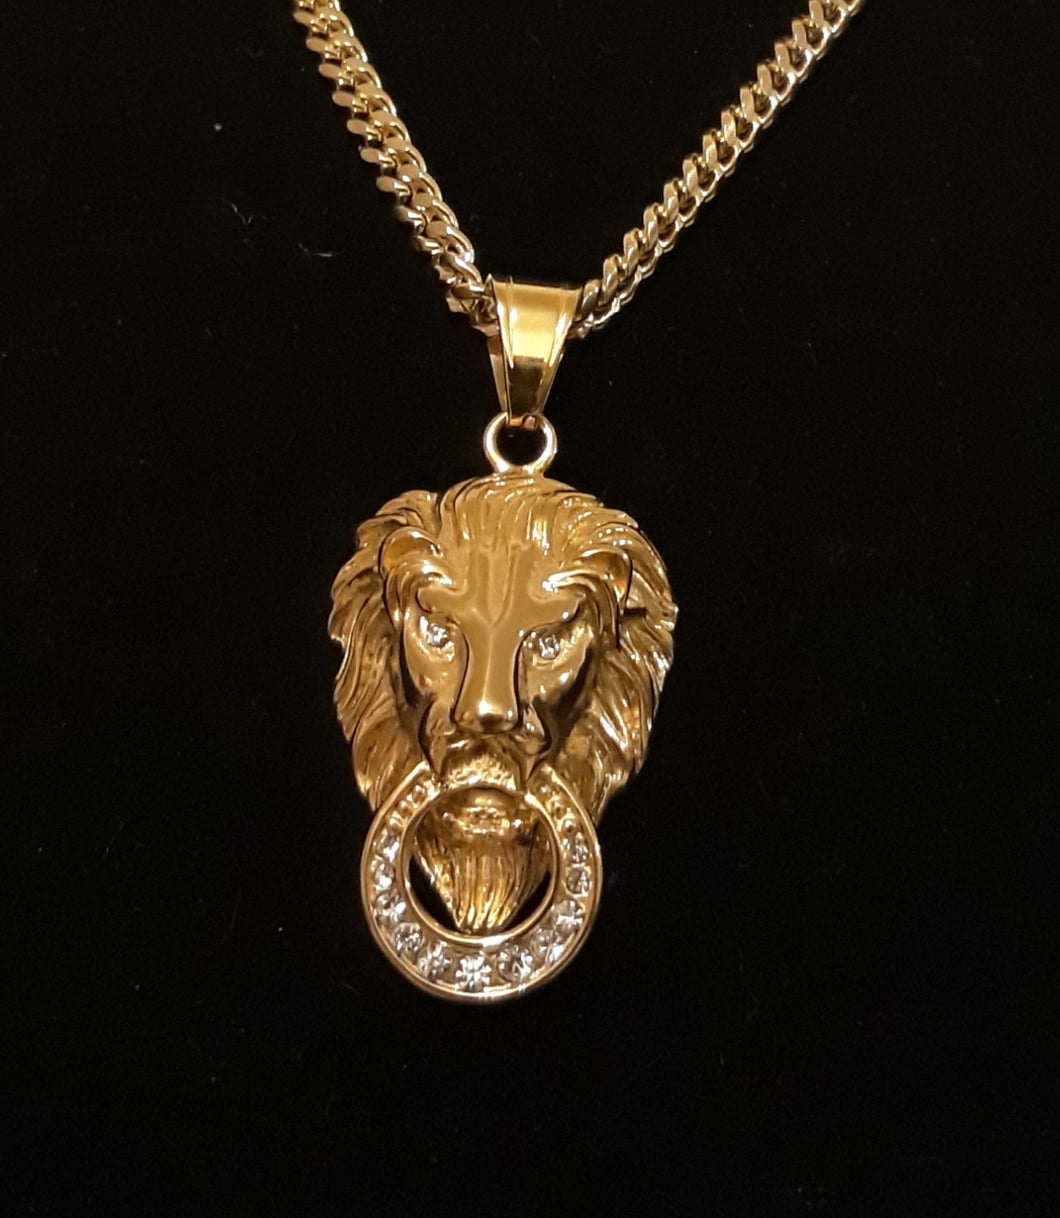 18k Gold plated Lion pendant